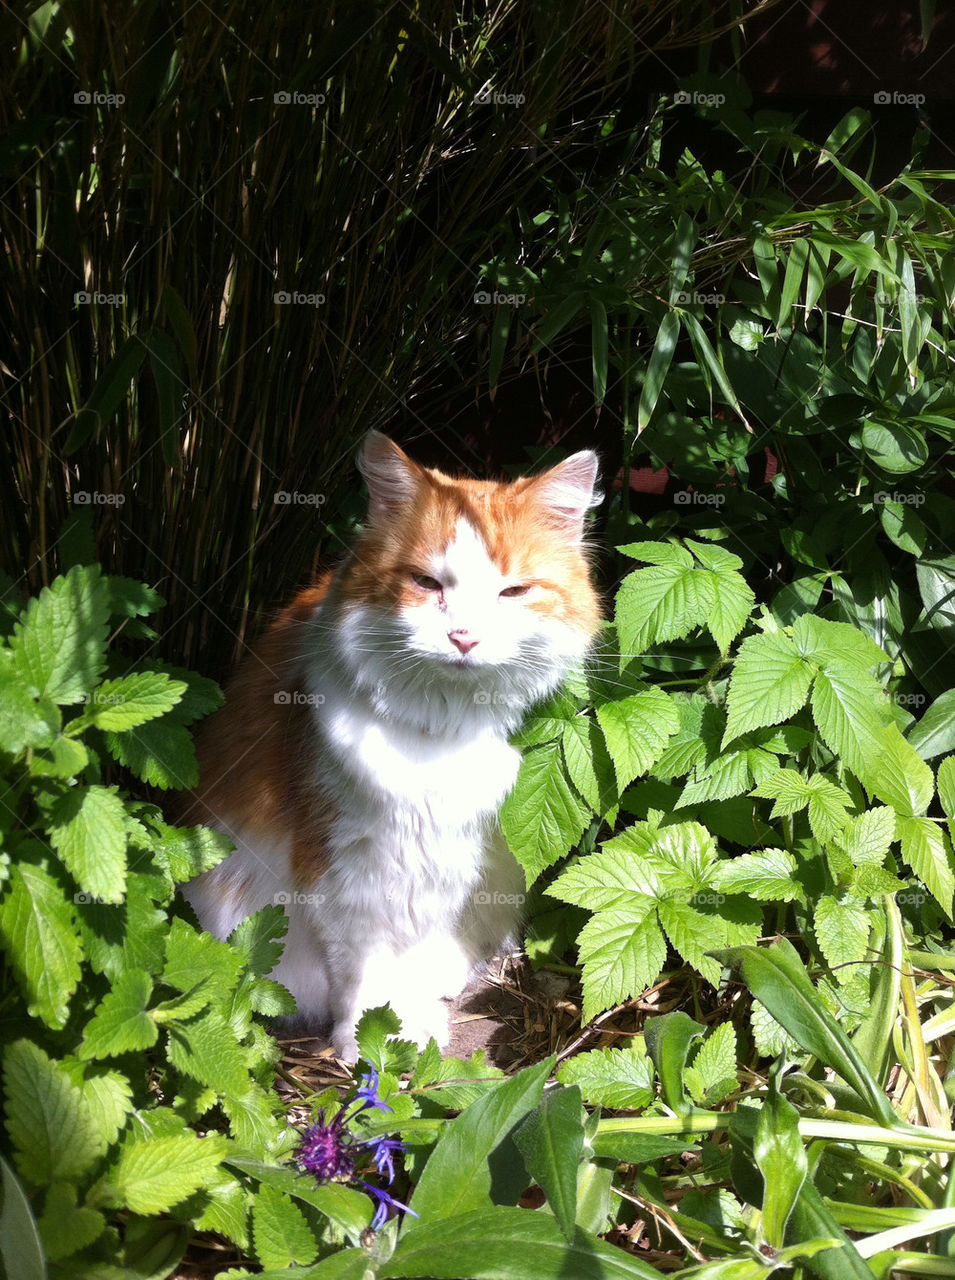 sweden garden jungle cat by hallis